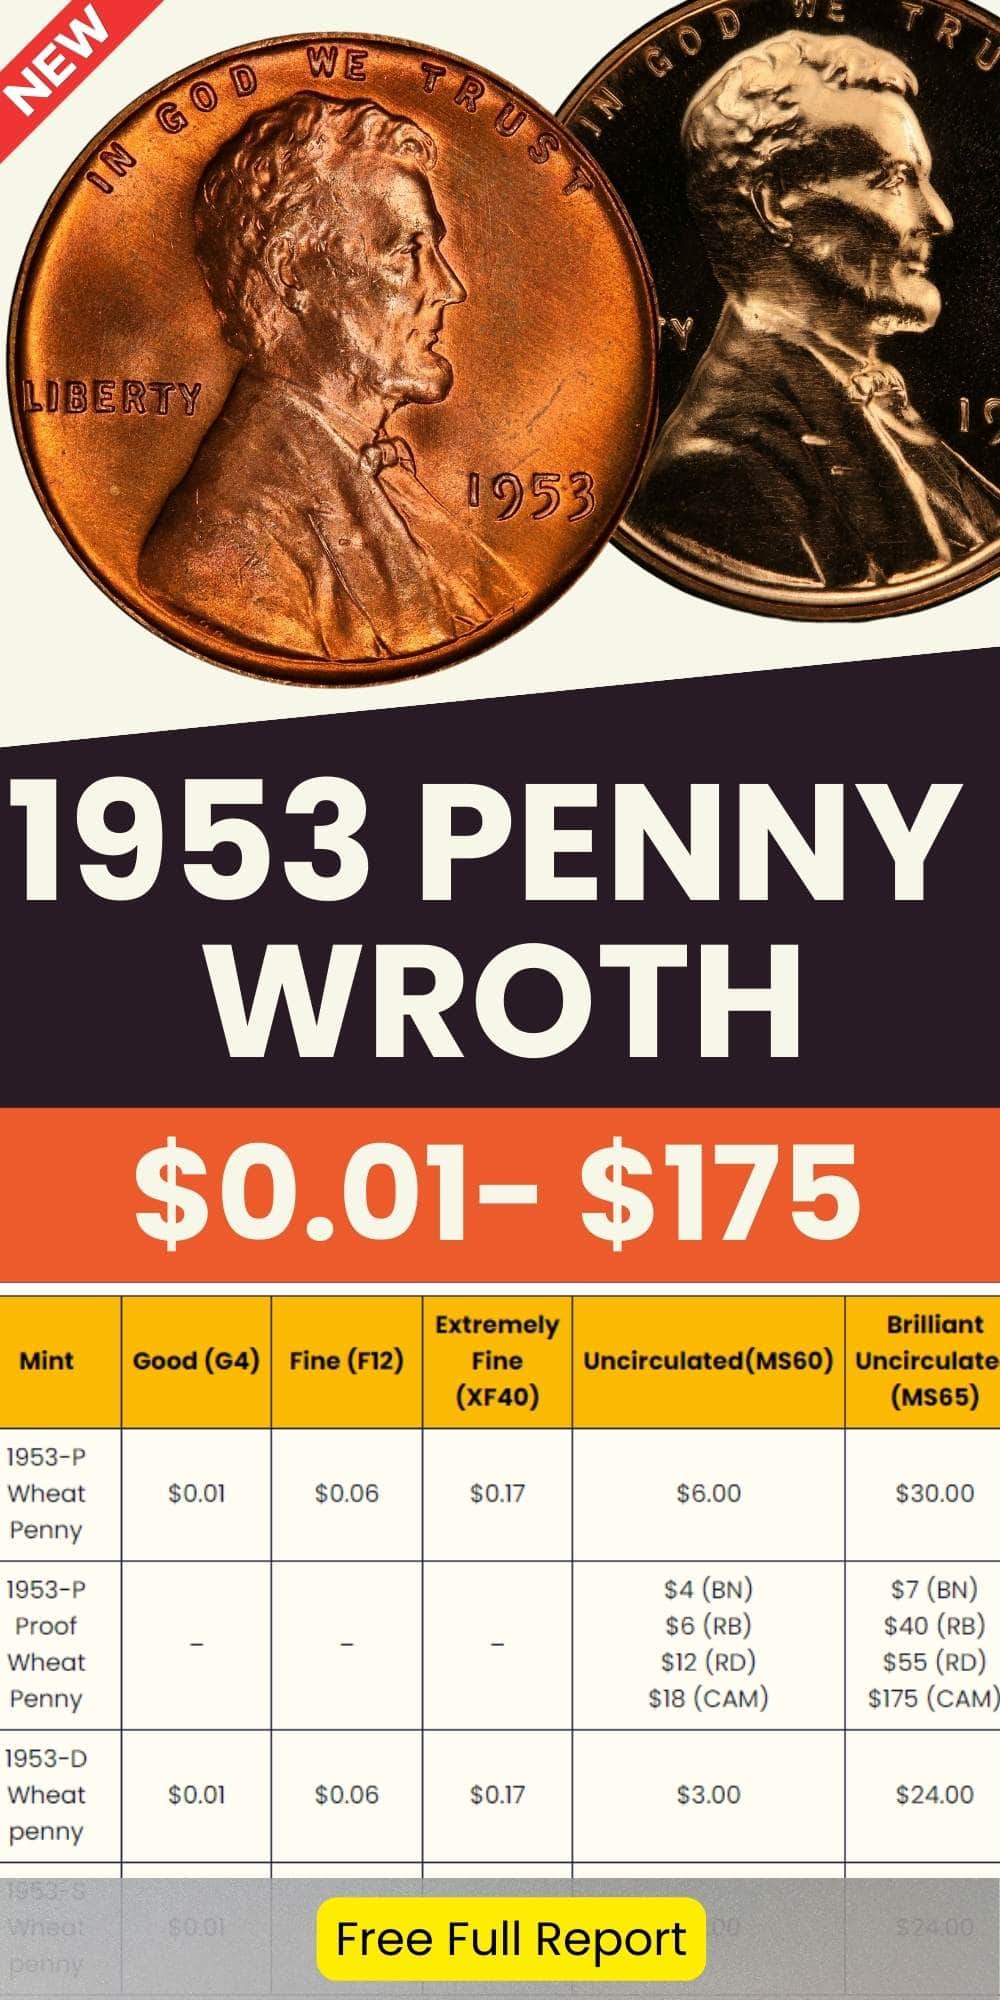 1953 Wheat Penny value chart